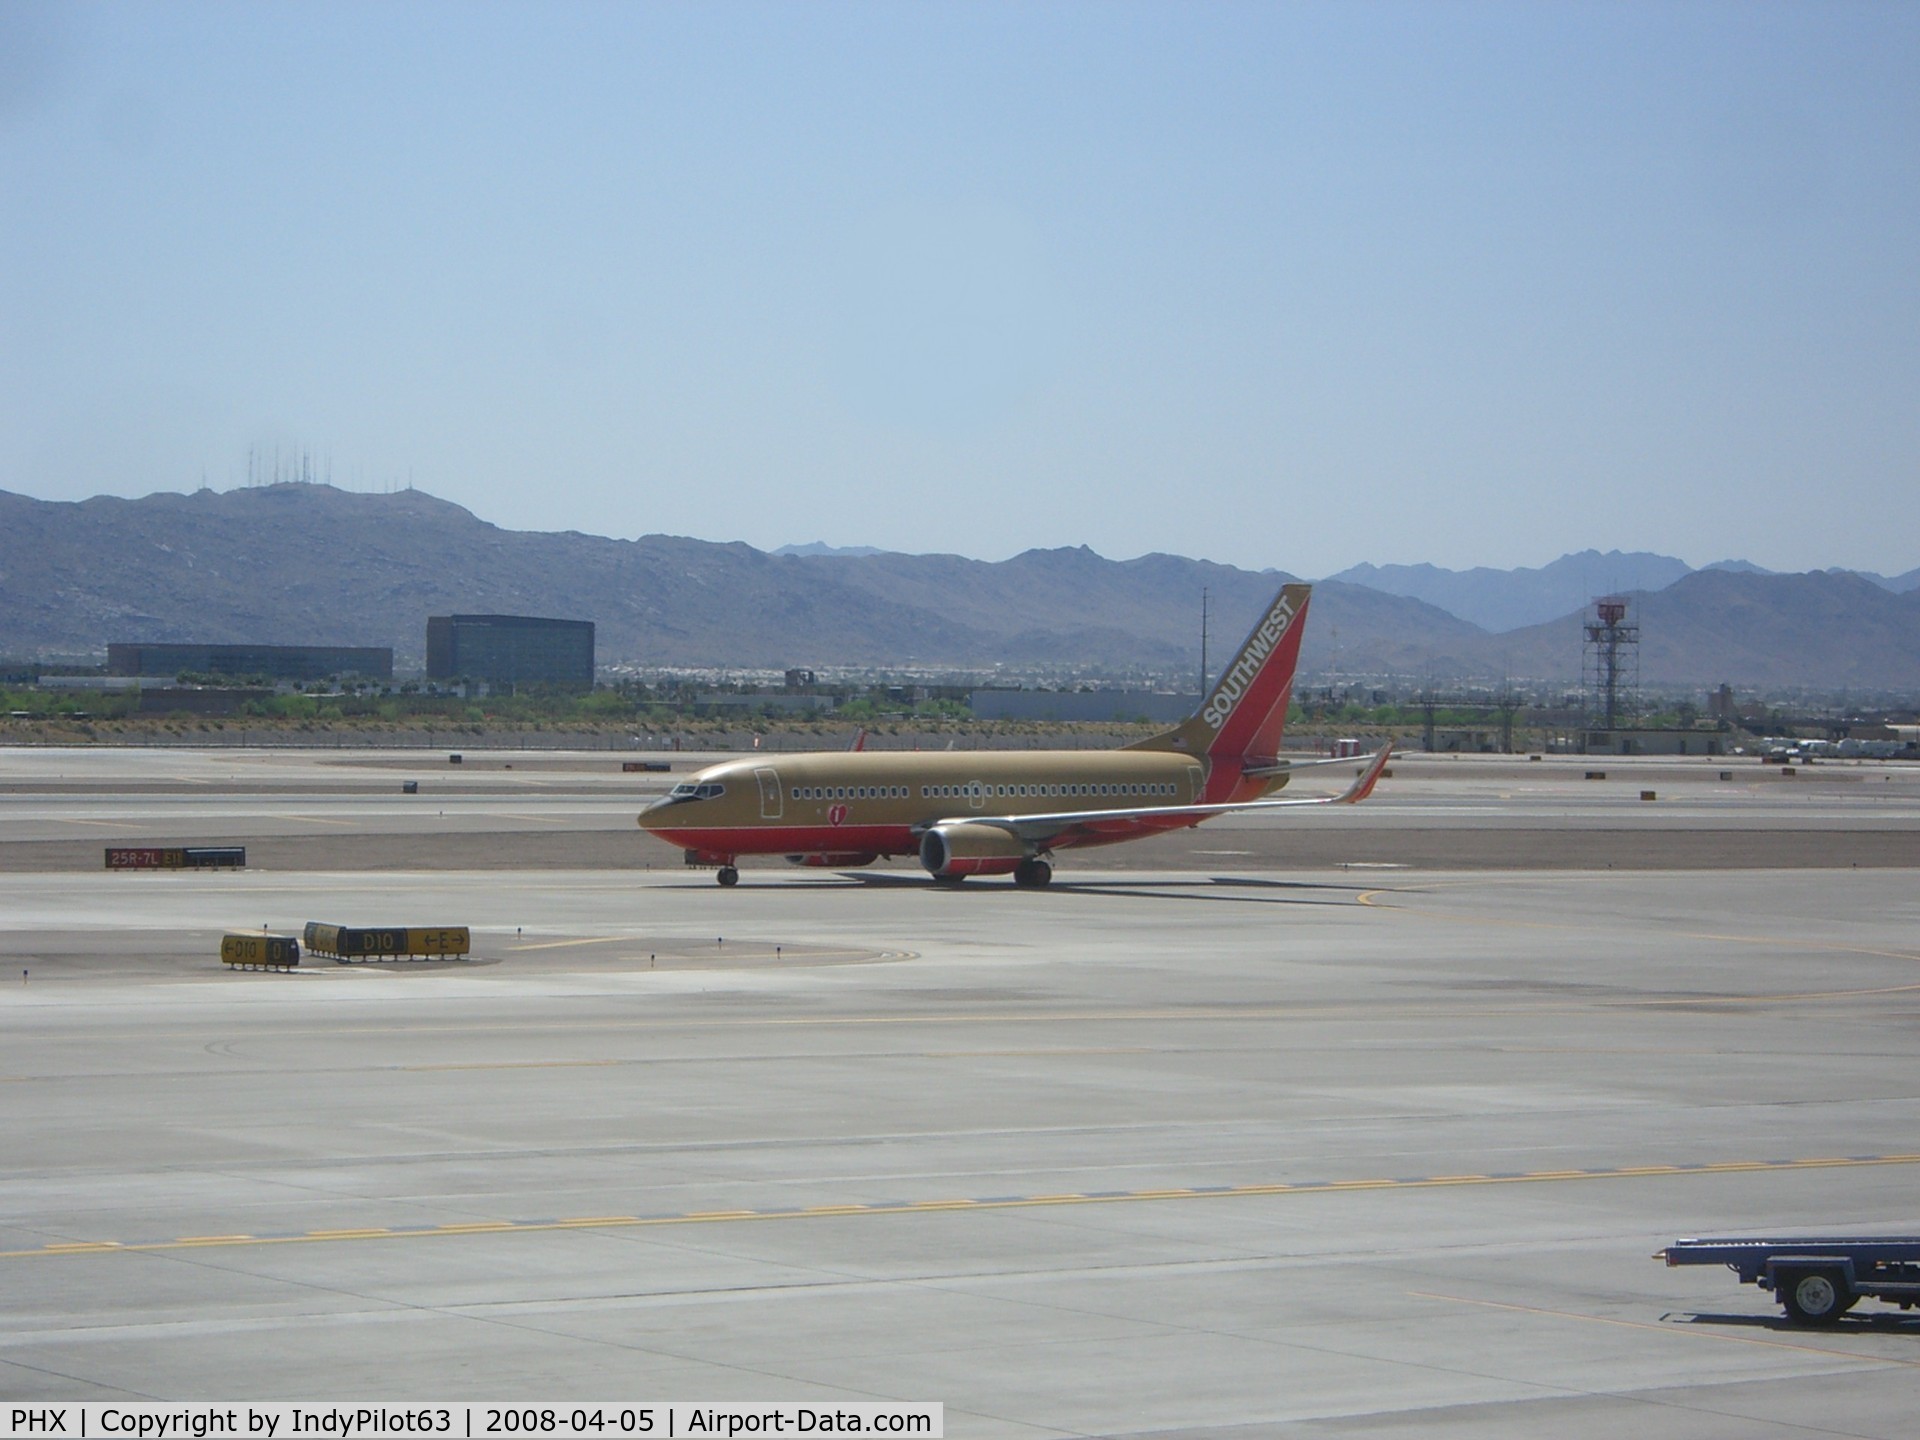 Phoenix Sky Harbor International Airport (PHX) - A Southwest 737, looking down toward South Mountain